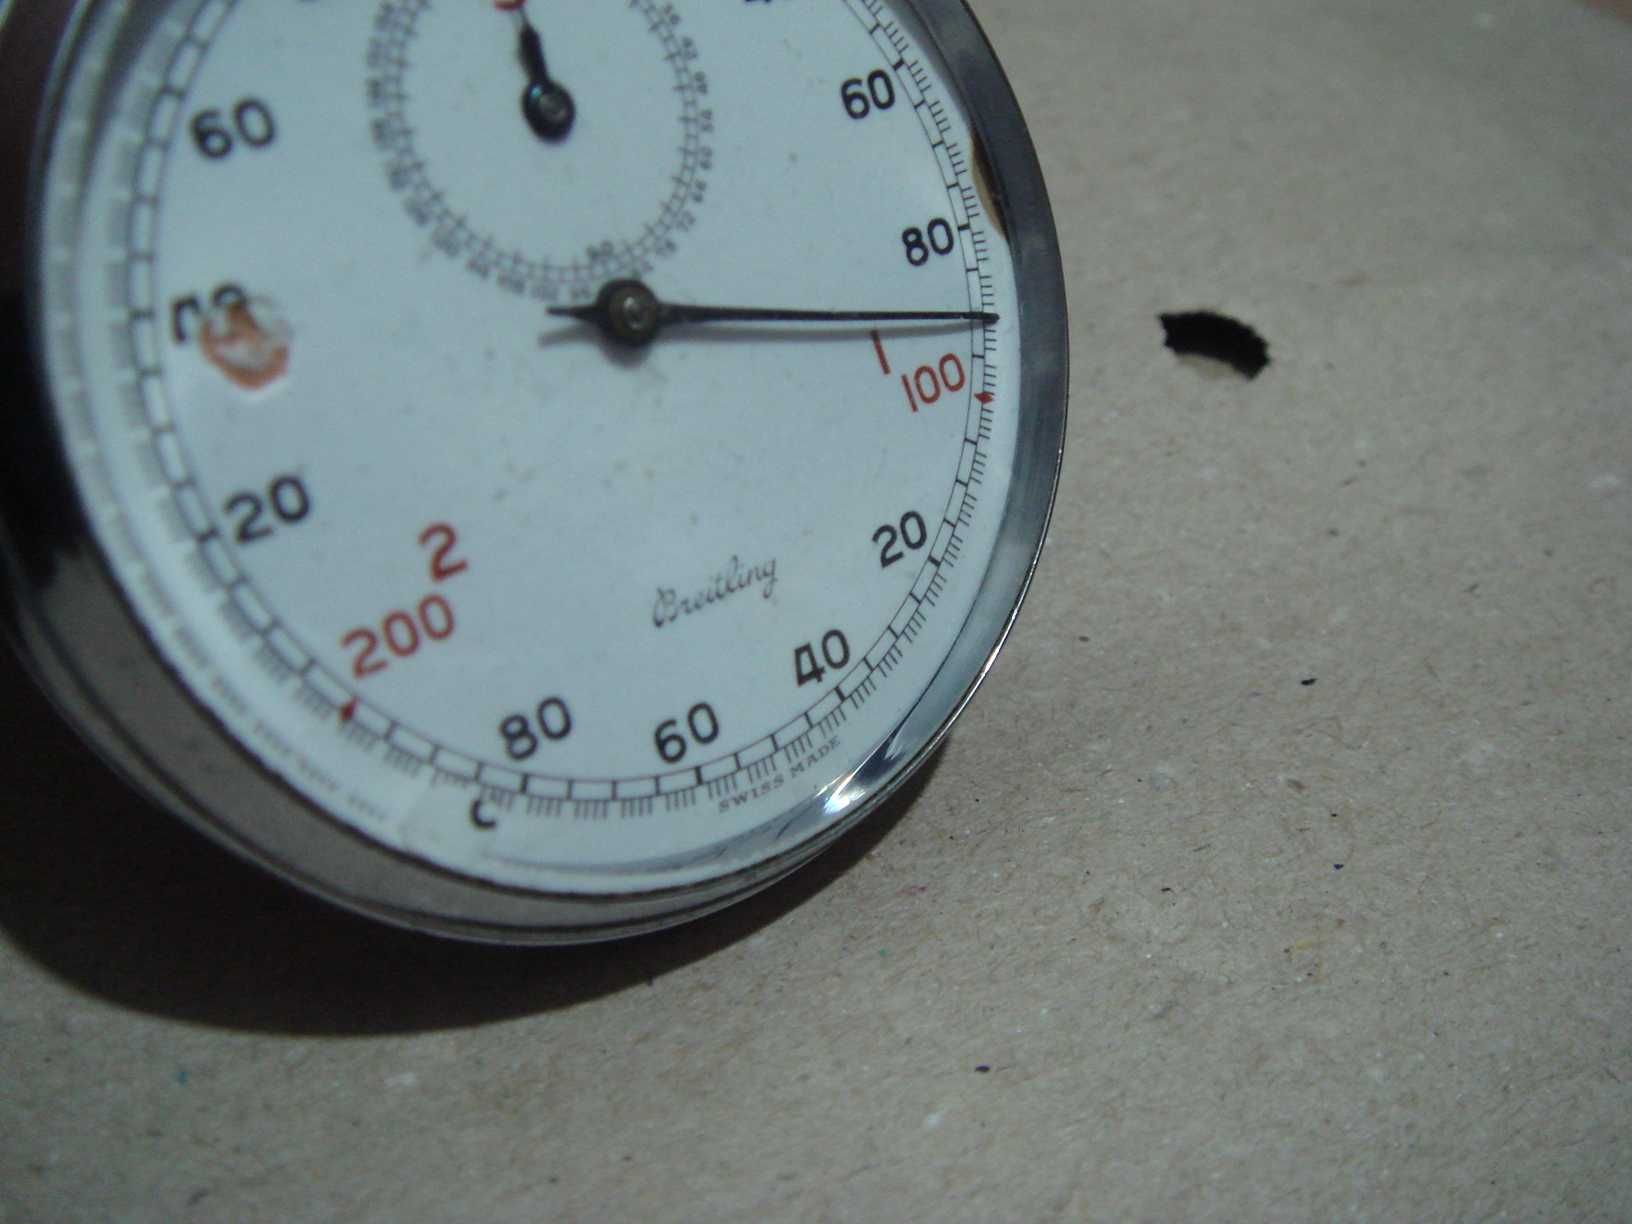 Cronometru Breitling SWISS Made - Necesita Reparatie/Servisare/Revizie